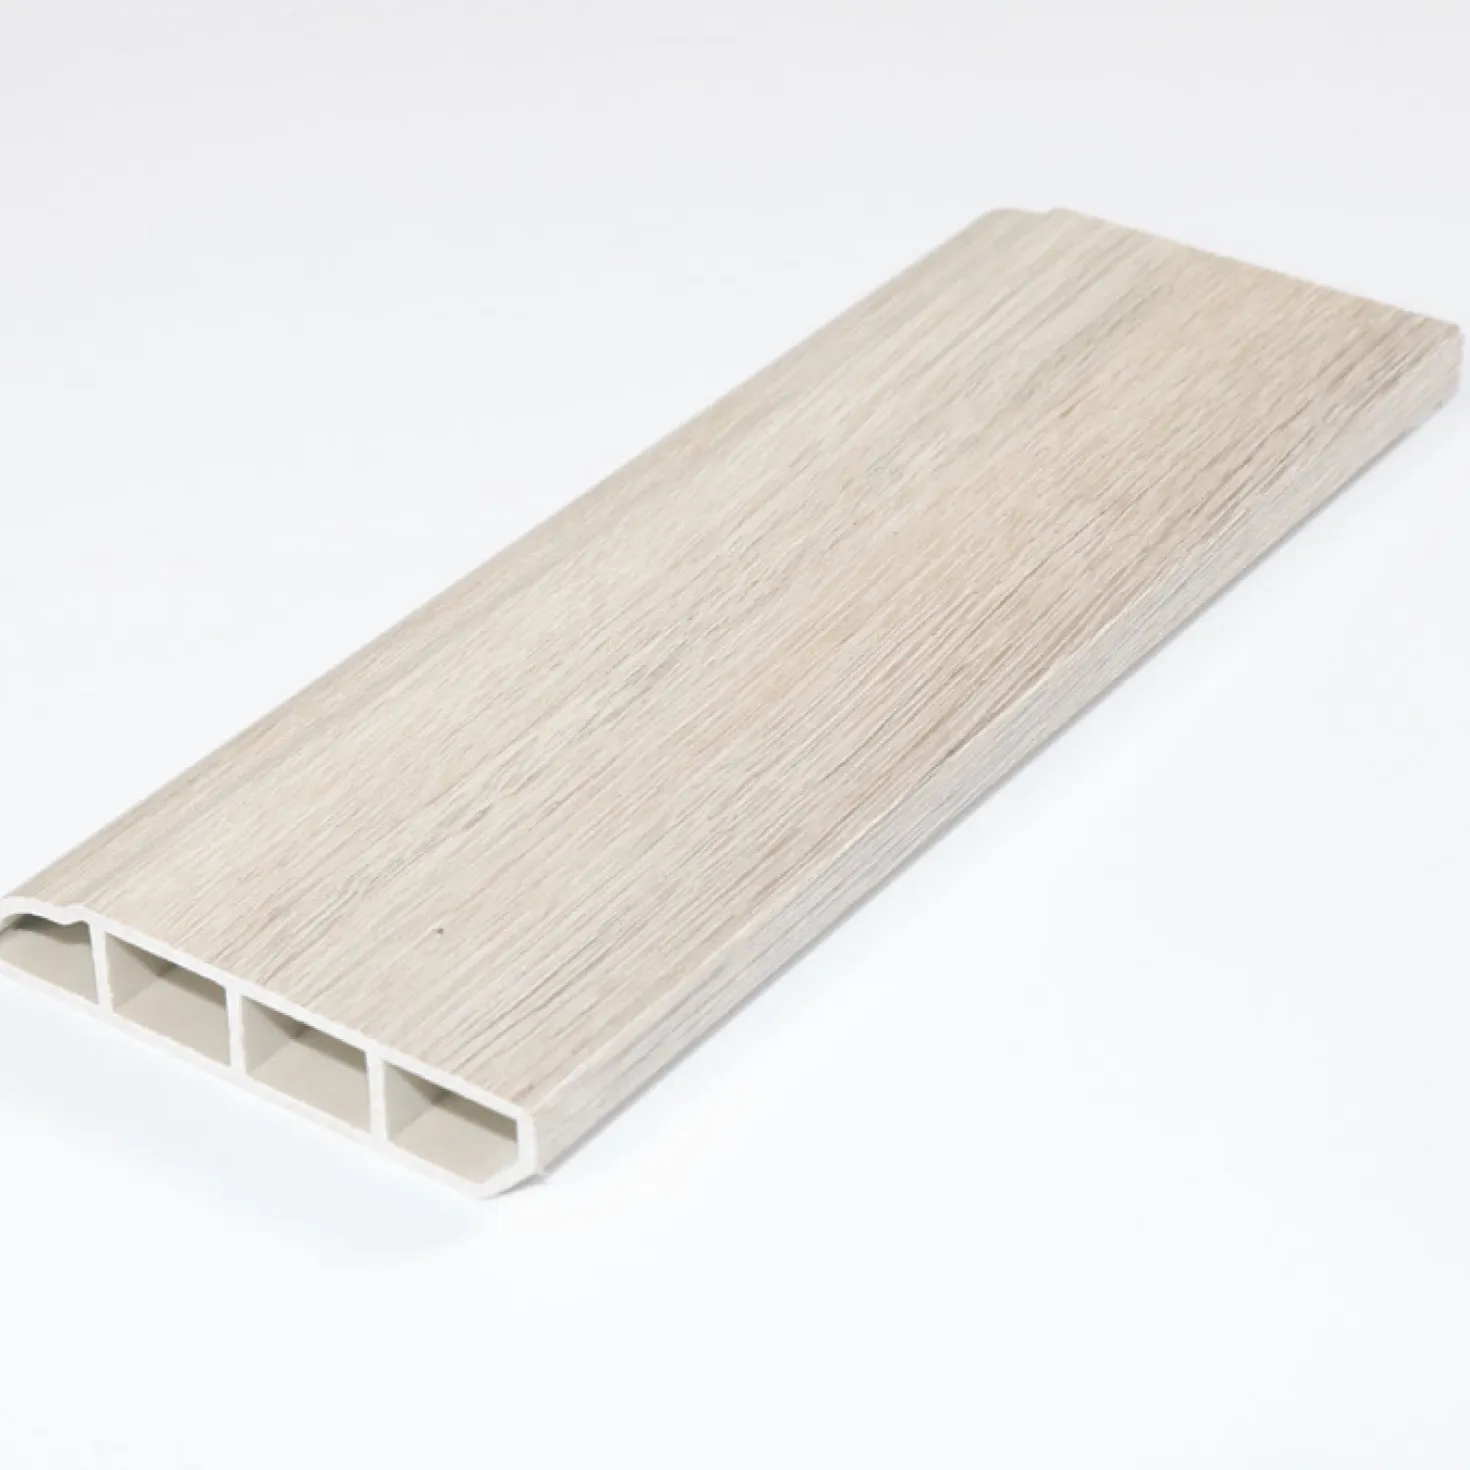 Waterproof Walnut T Door Bar Threshold Strips For Same Level Flooring